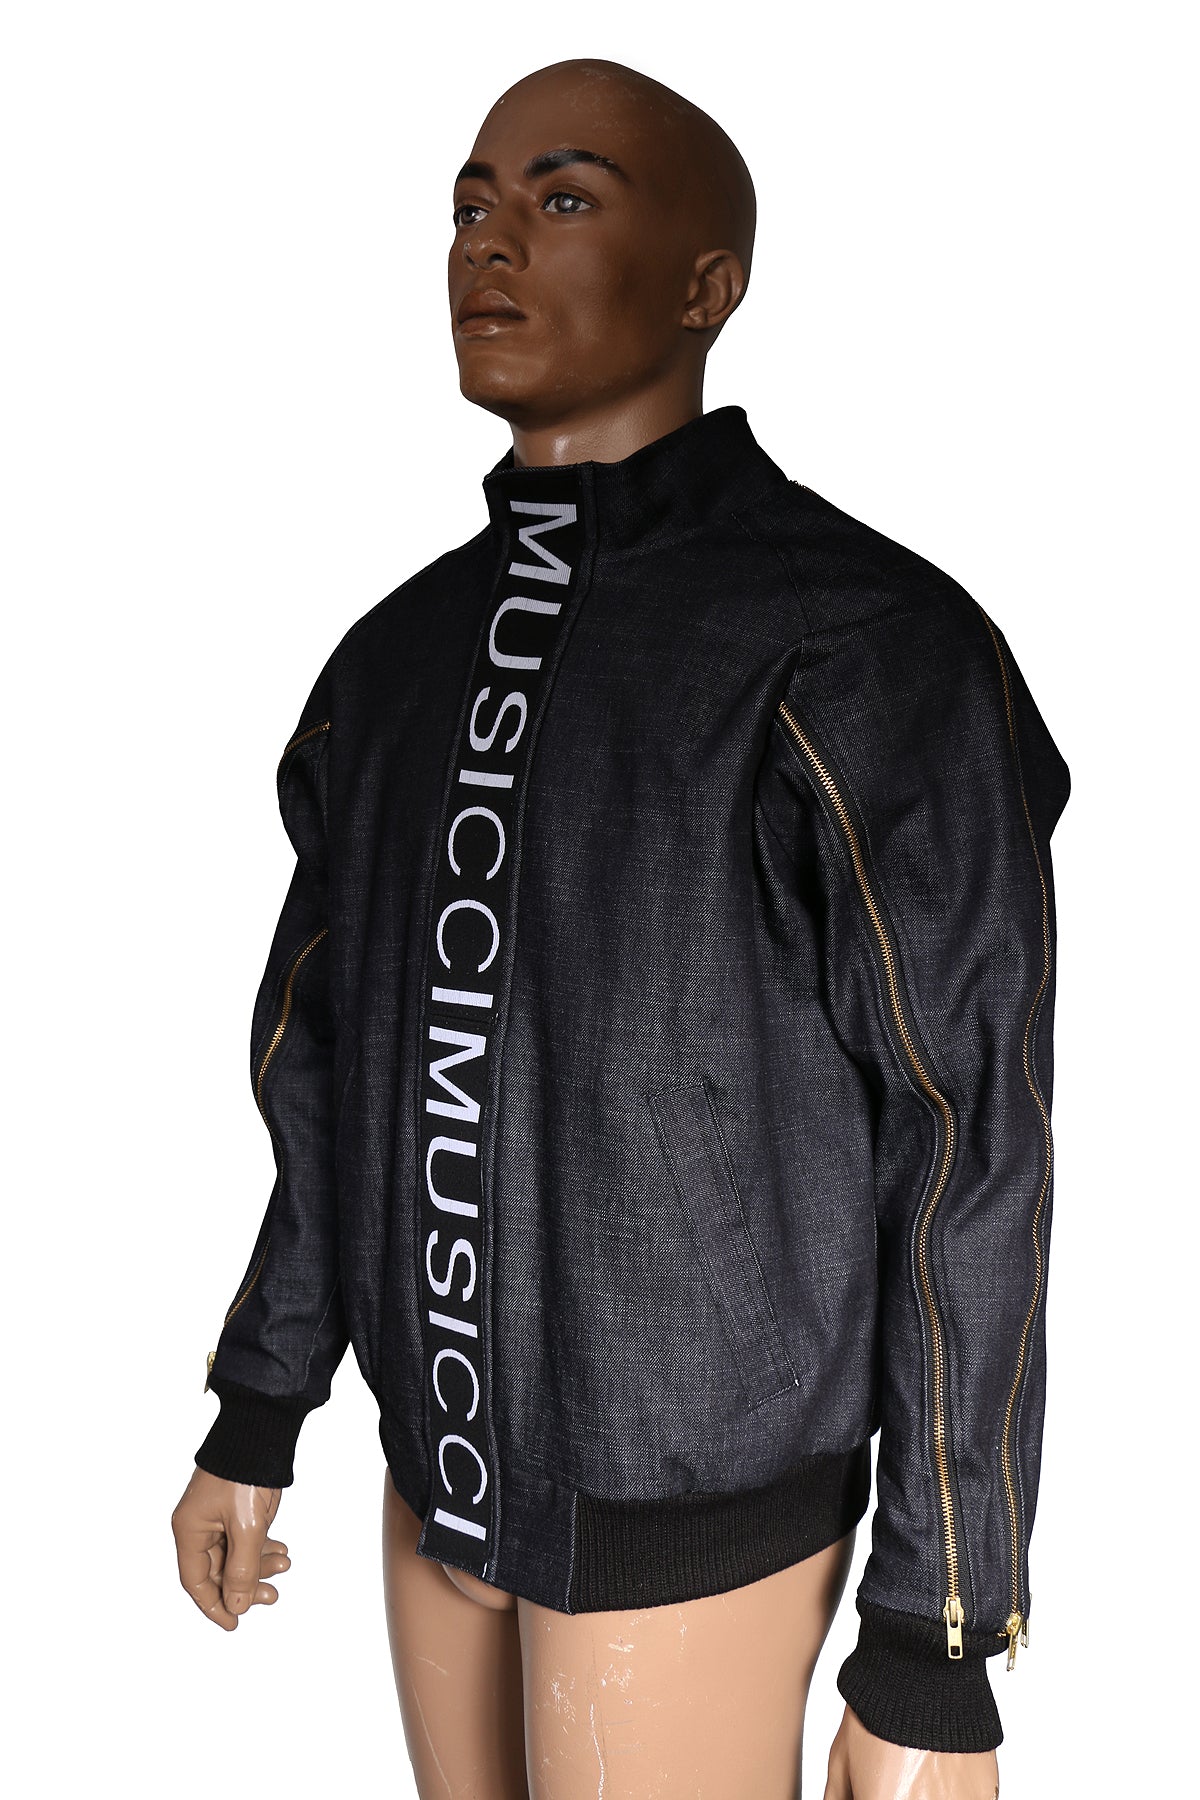 Denim sport Jacket with accesorized zippers+back pocket